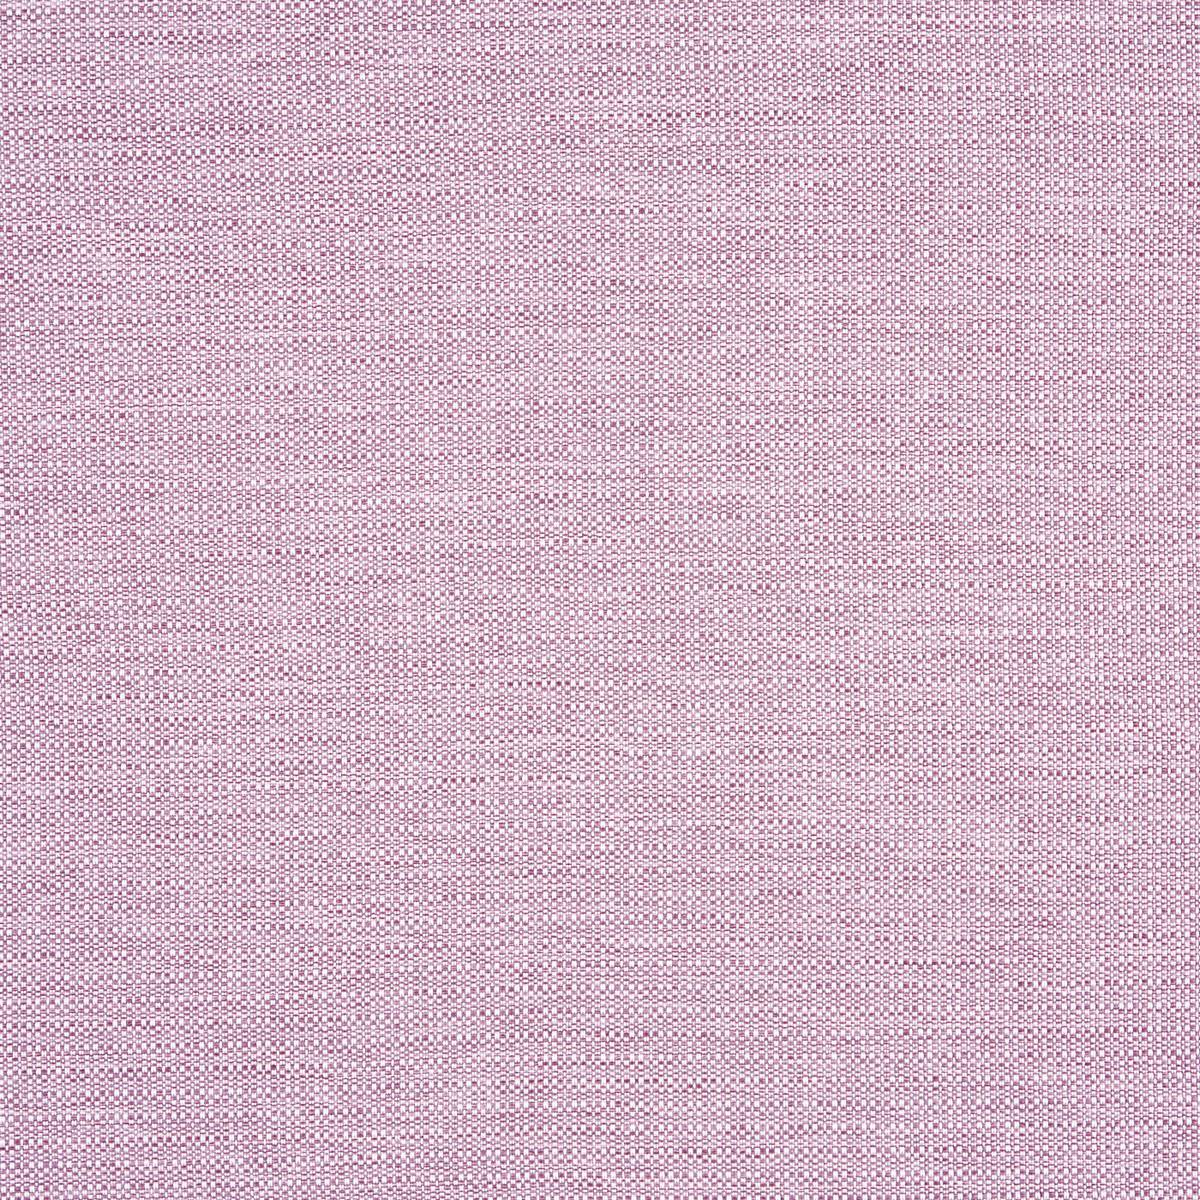 Tweed Lilac Fabric by Prestigious Textiles